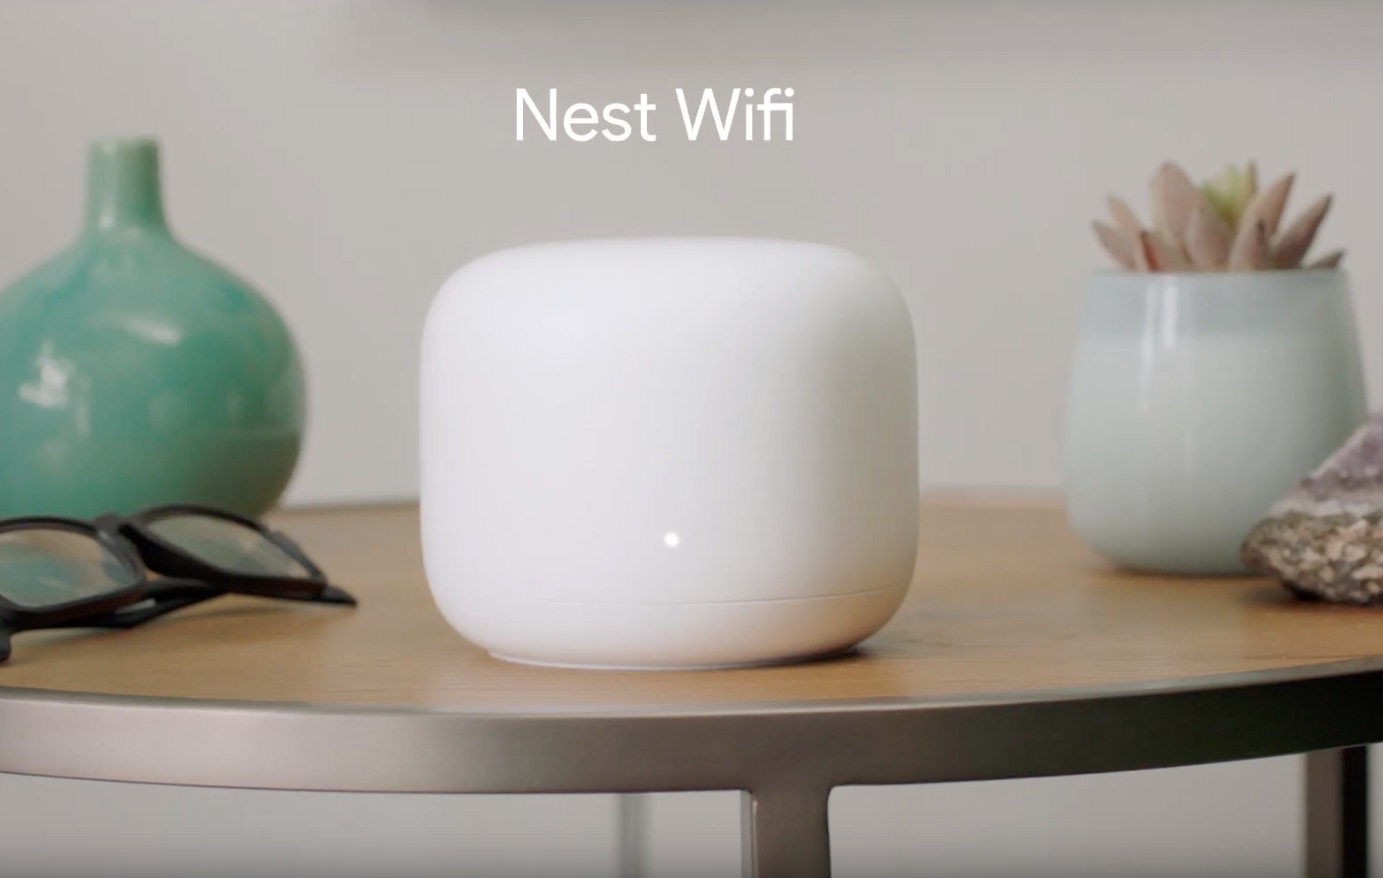 Google Nest Wifi announced